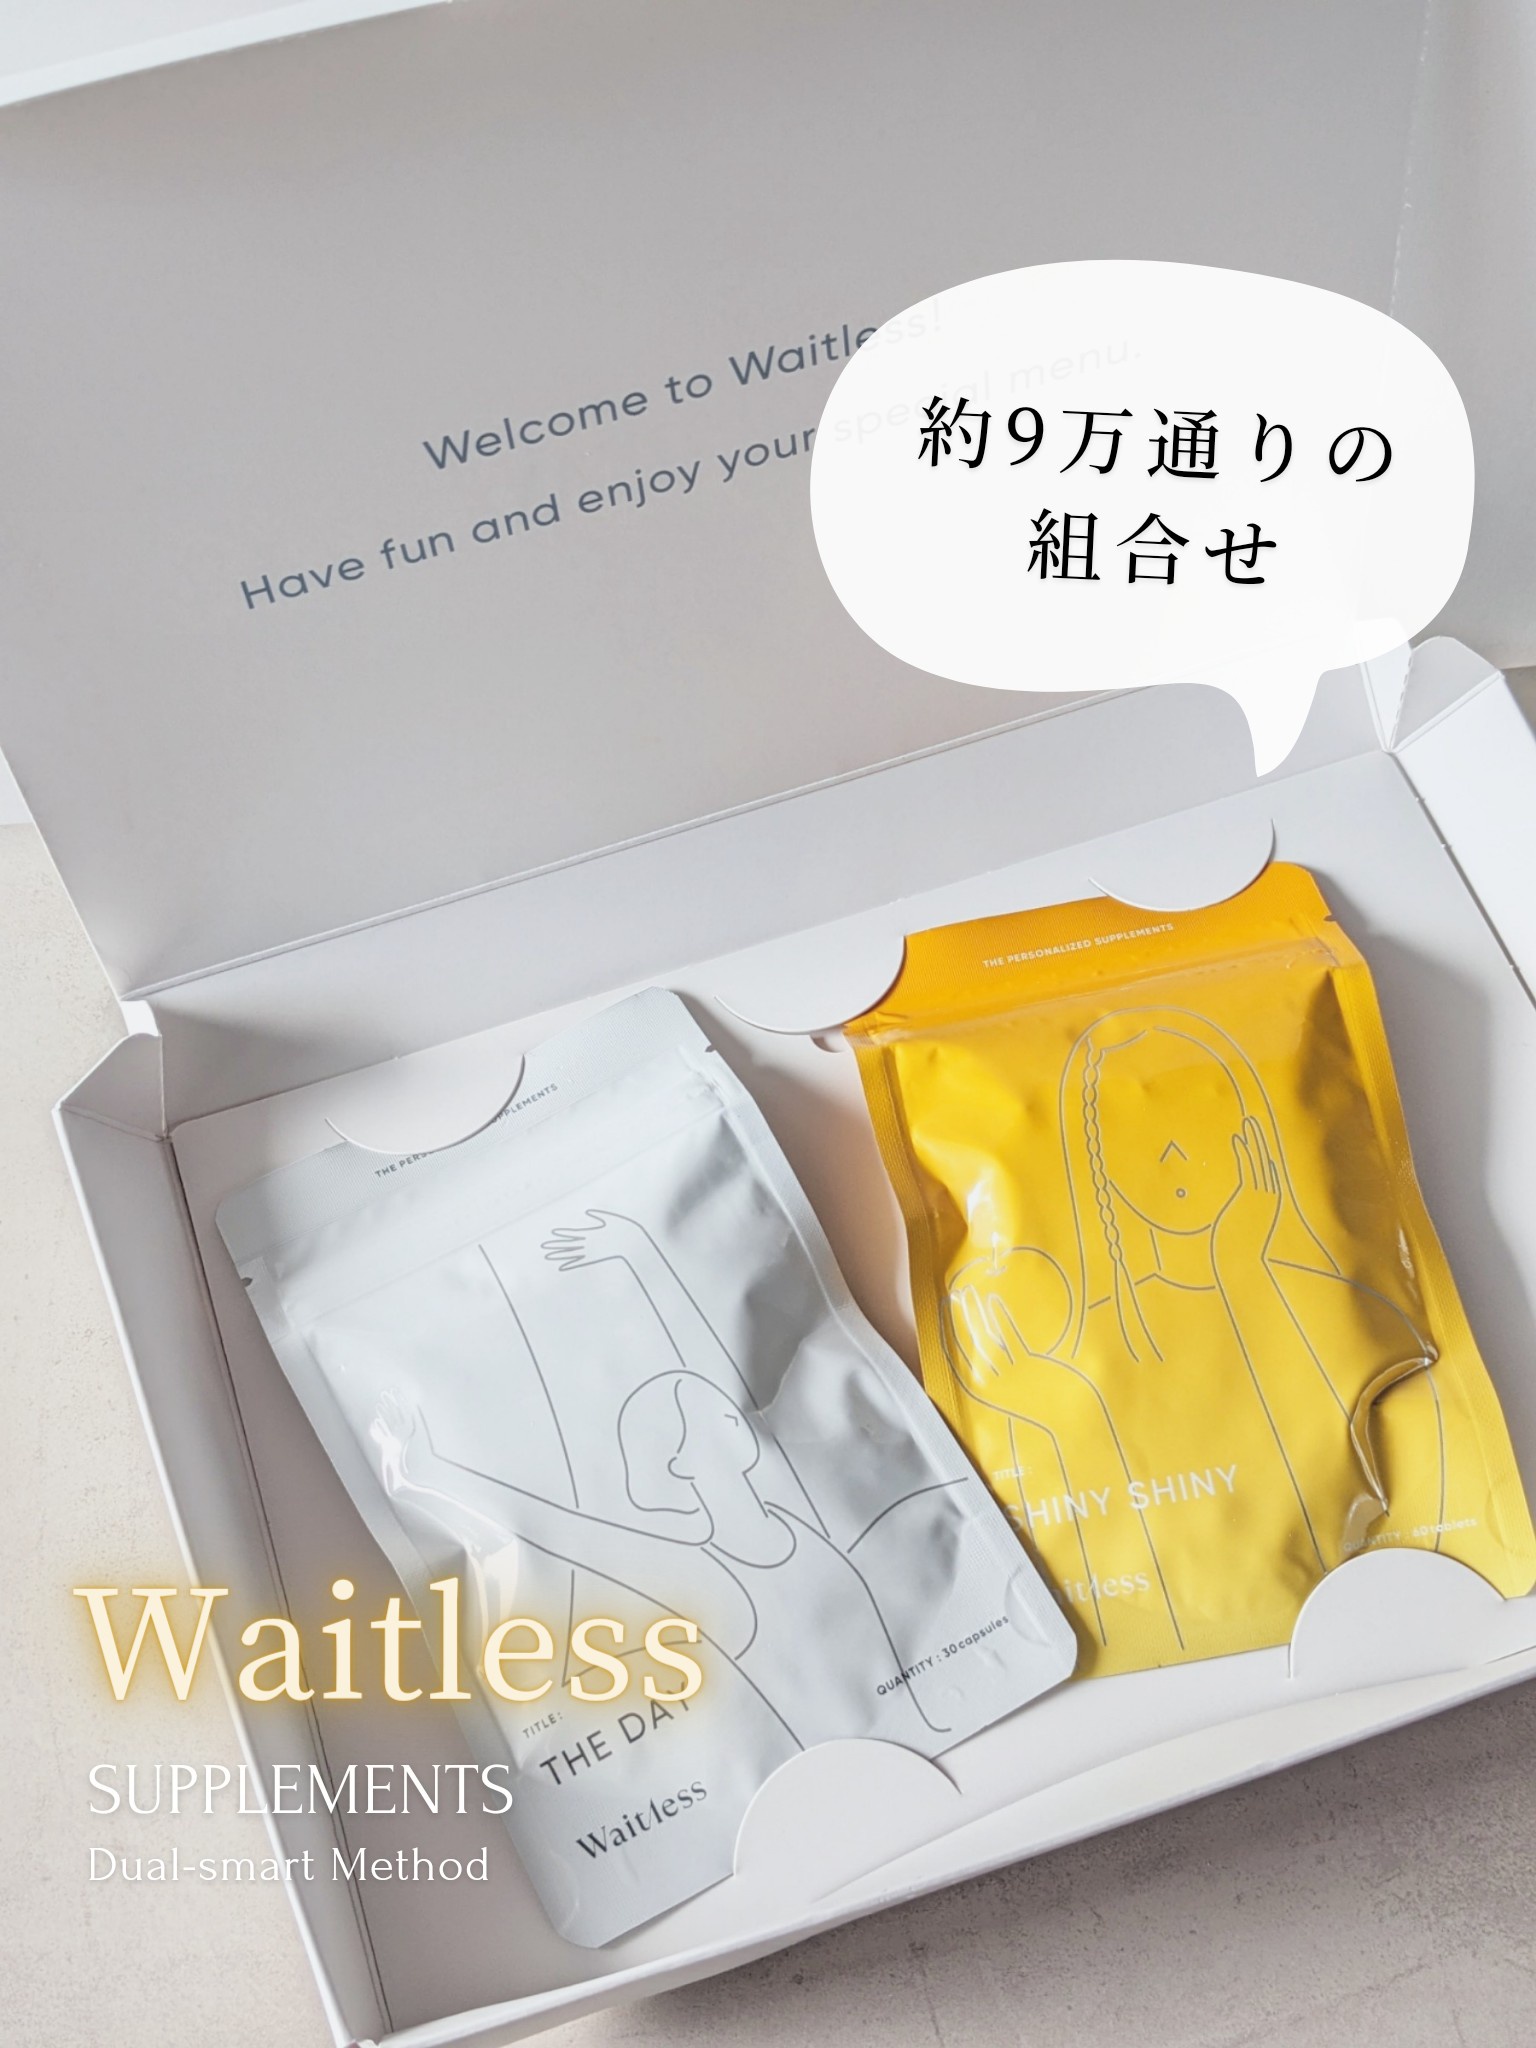 ☆Waitless☆サプリメント!!パック付き - 健康アクセサリー